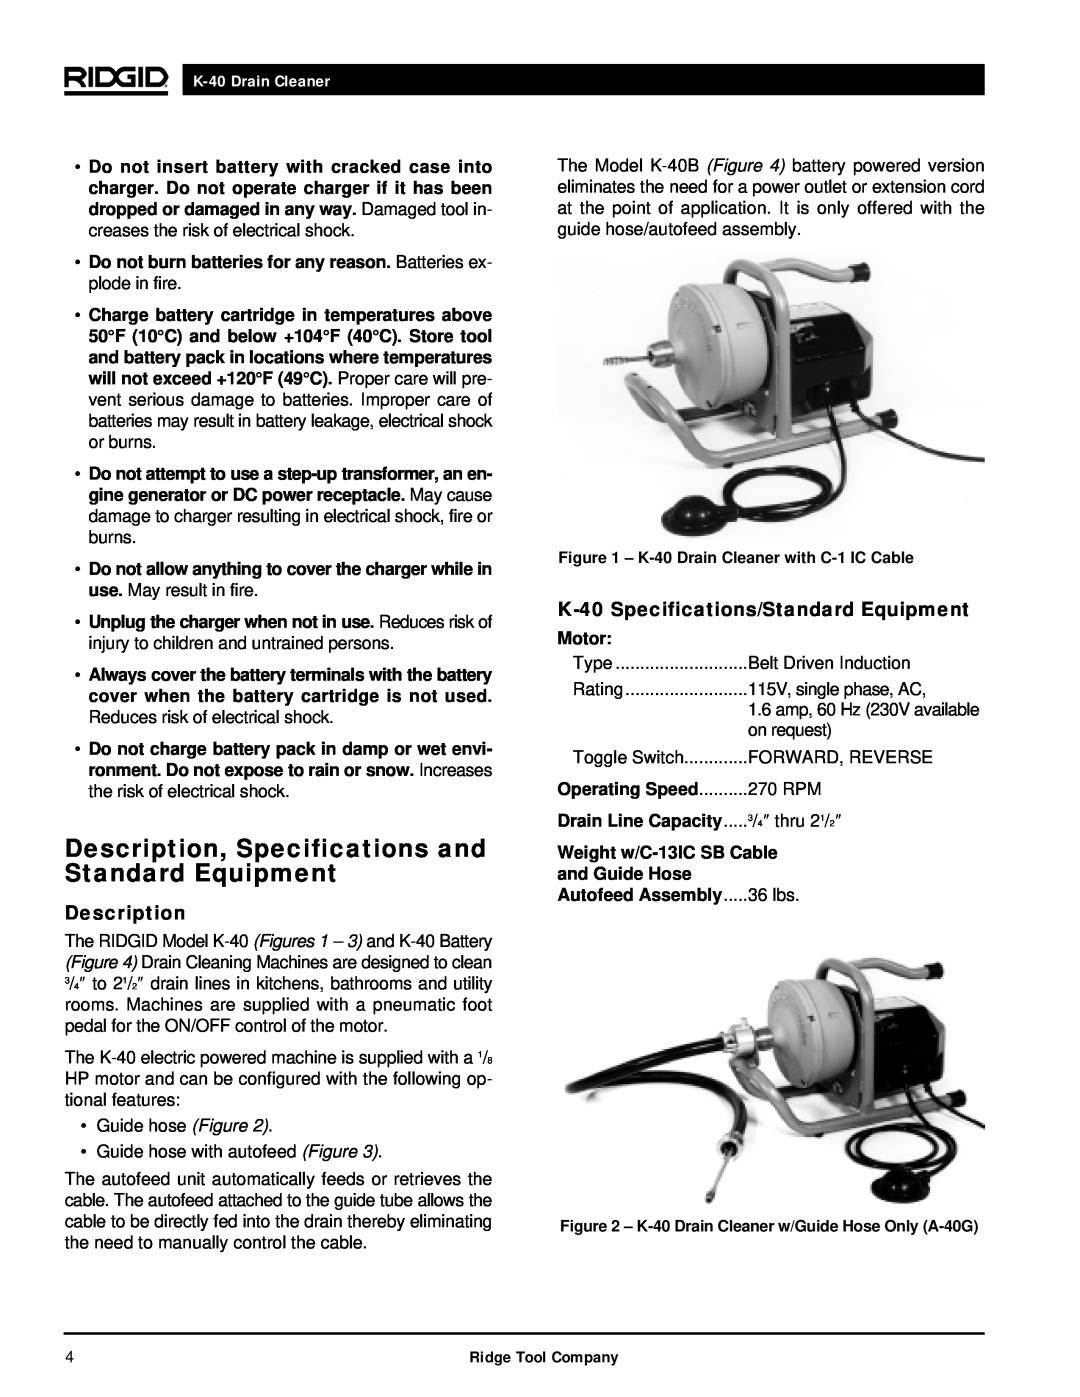 RIDGID K-40B, K-40G PF manual Description, K-40Specifications/Standard Equipment, K-40Drain Cleaner 